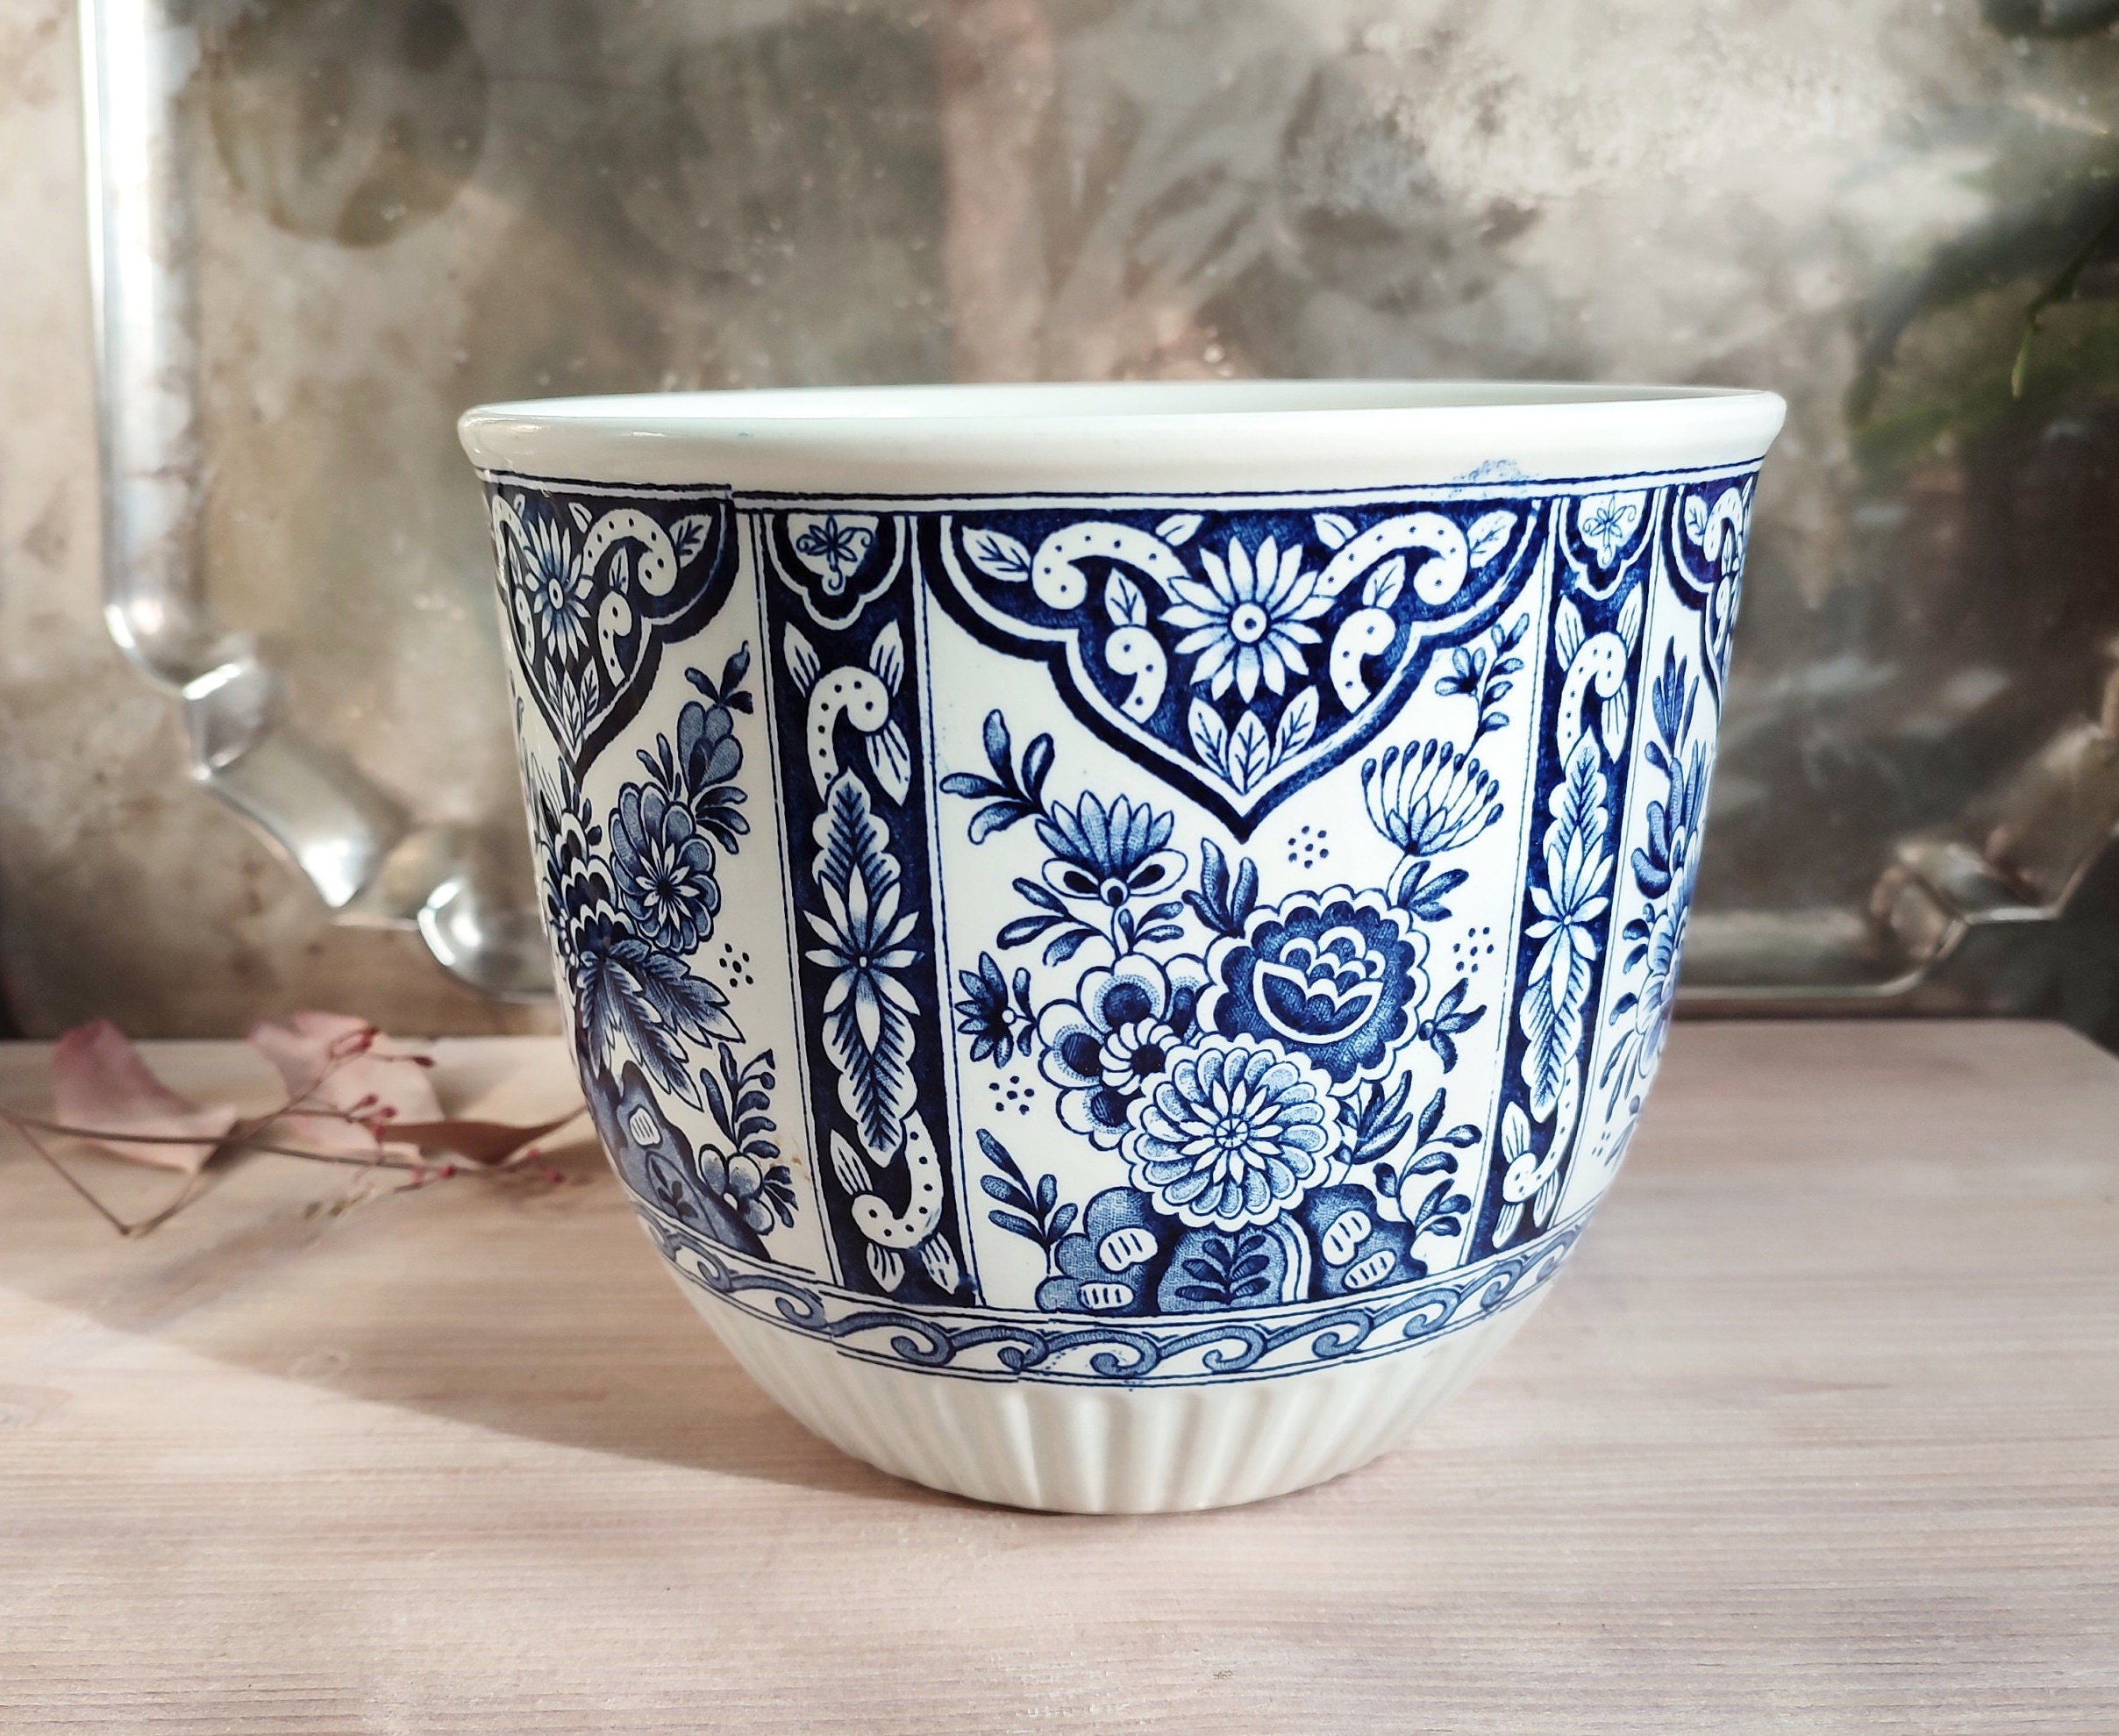 Casa Padrino Luxus Keramik Blumentopf Blau / Mehrfarbig Ø 27 x H. 20 cm -  Runder handgefertigter & handbemalter Keramik Pflanzentopf - Luxus Qualität  - Made in Italy